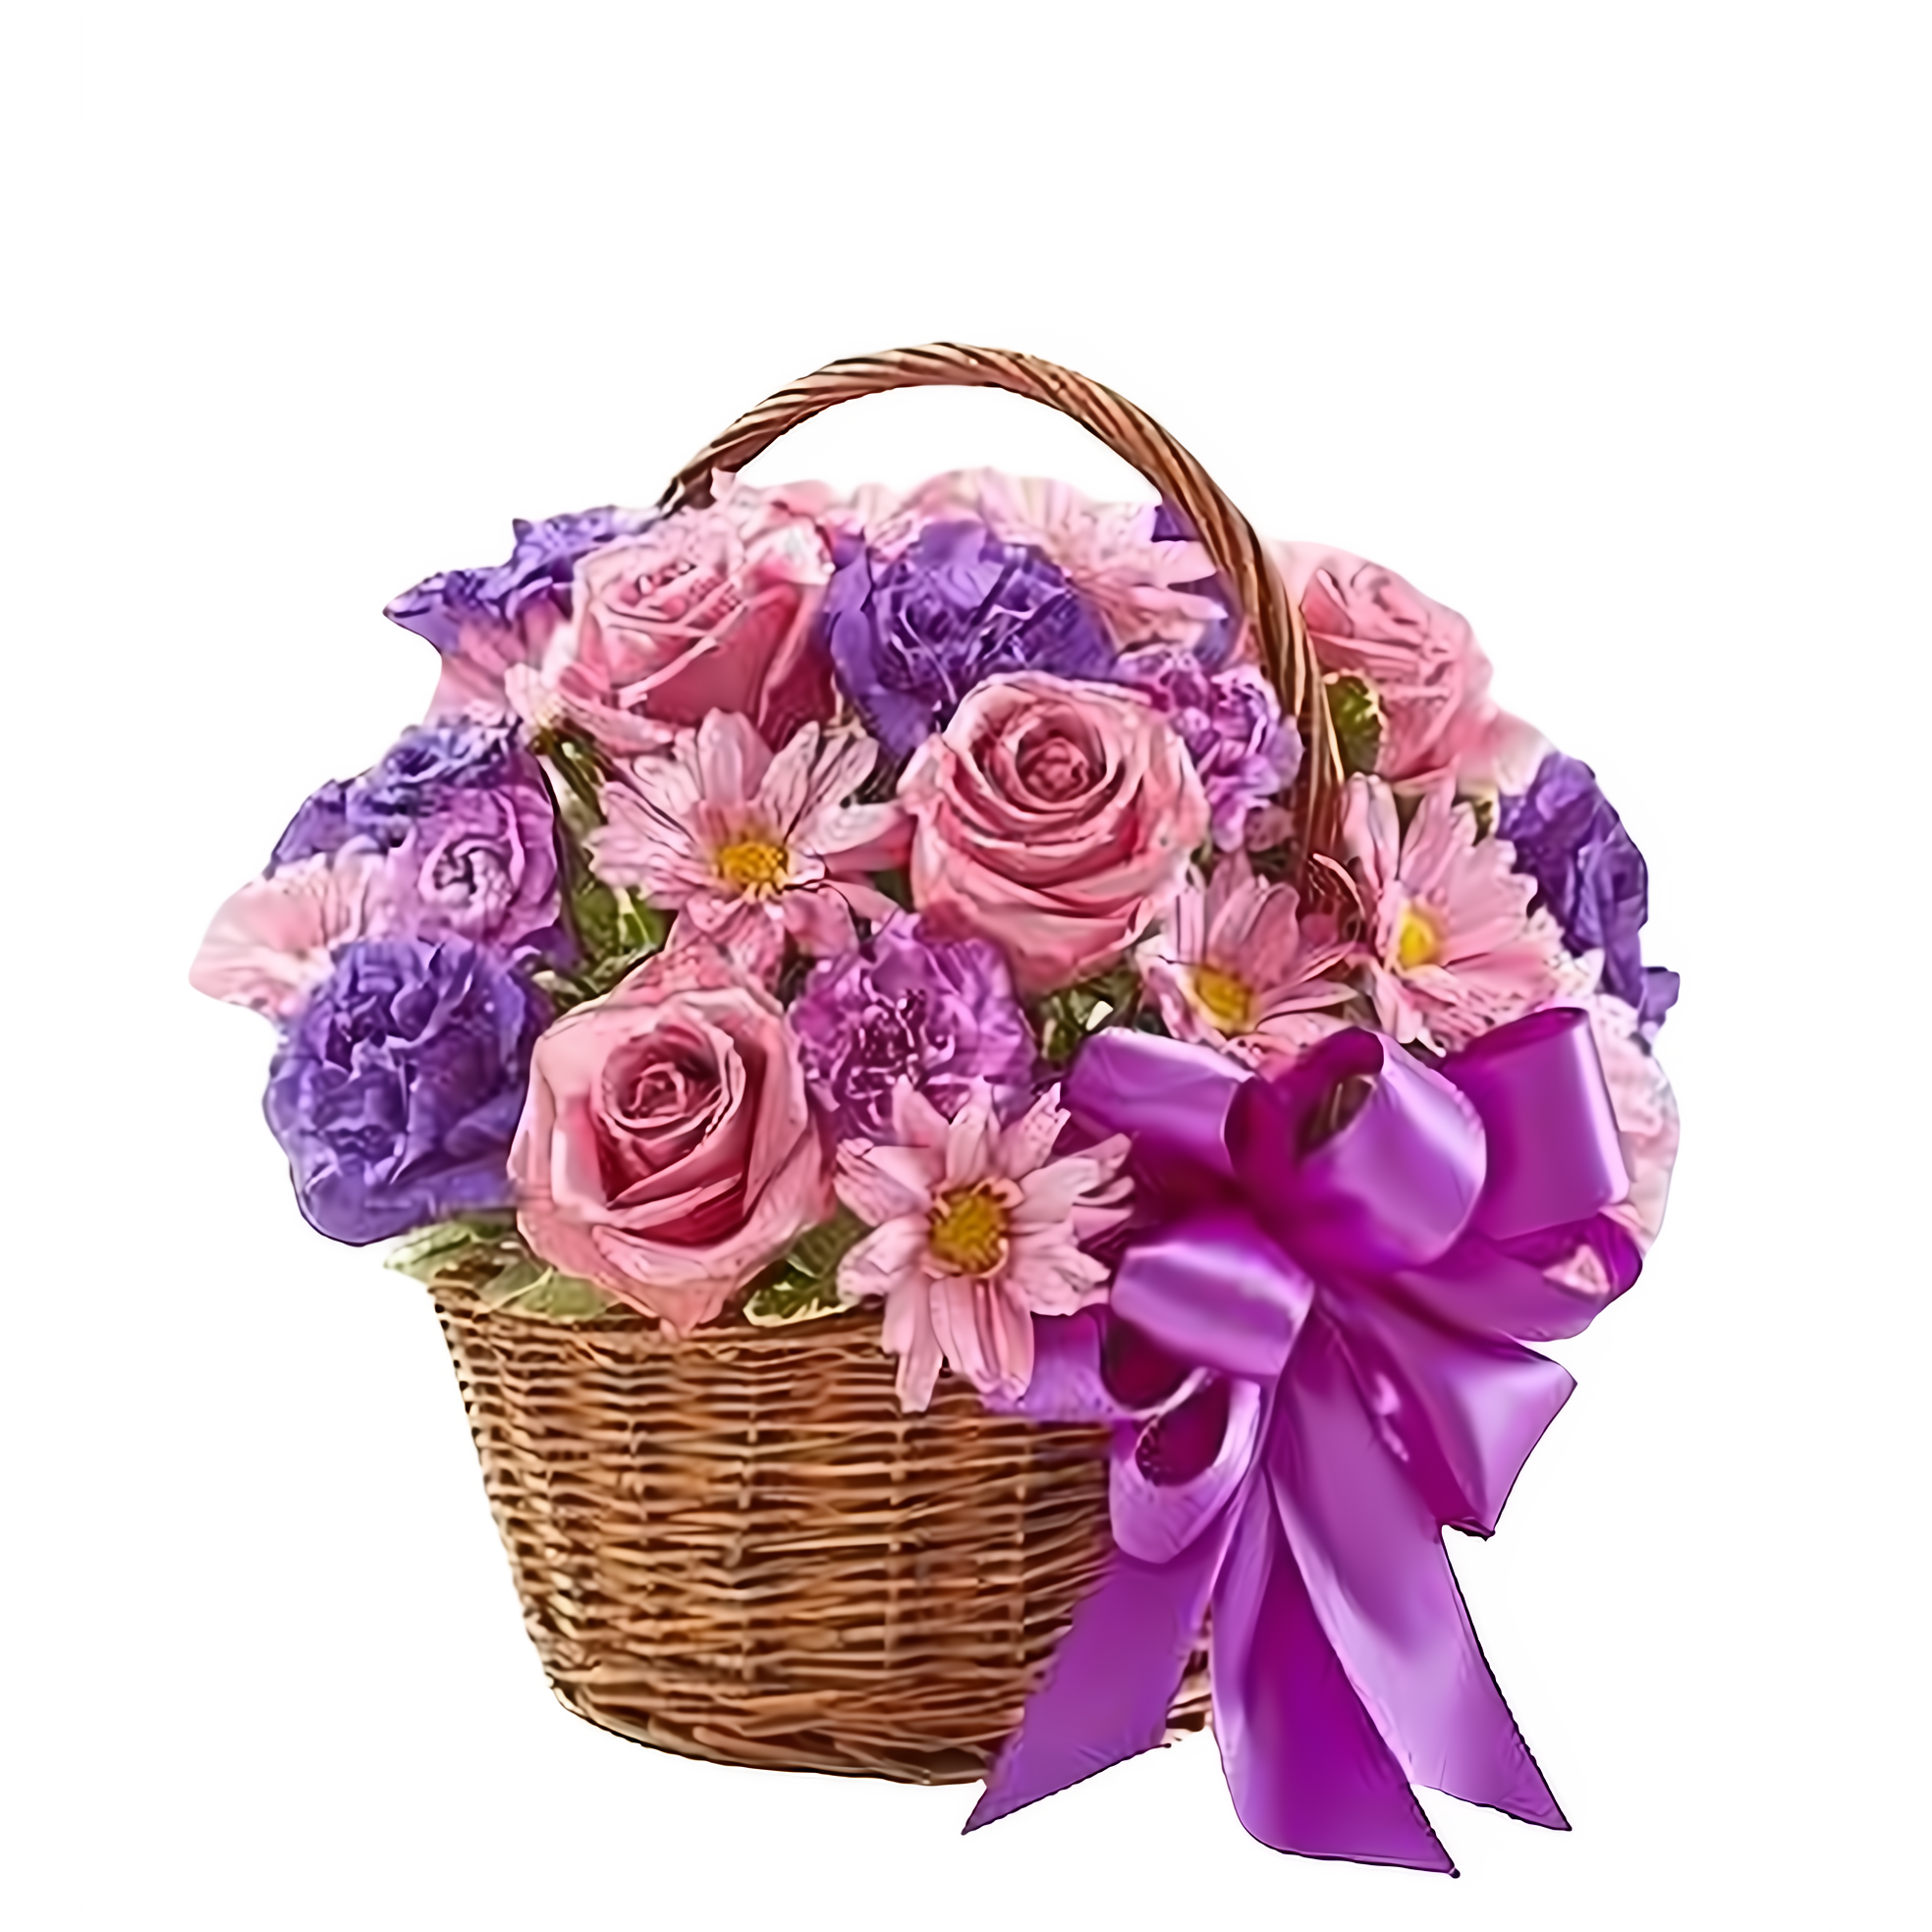 Basket of Blooms - Seasonal > Mother's Day - 5/9